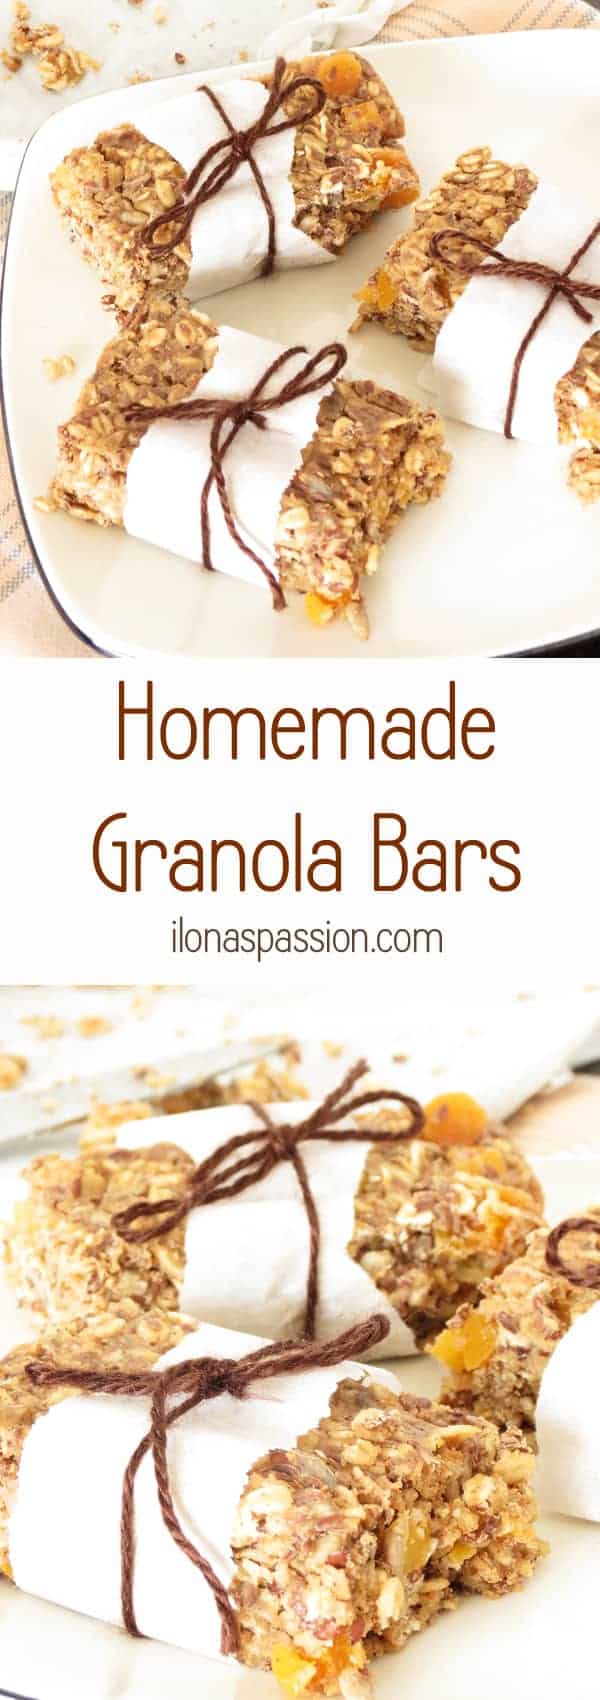 Healthy Homemade Granola bars by ilonaspassion.com